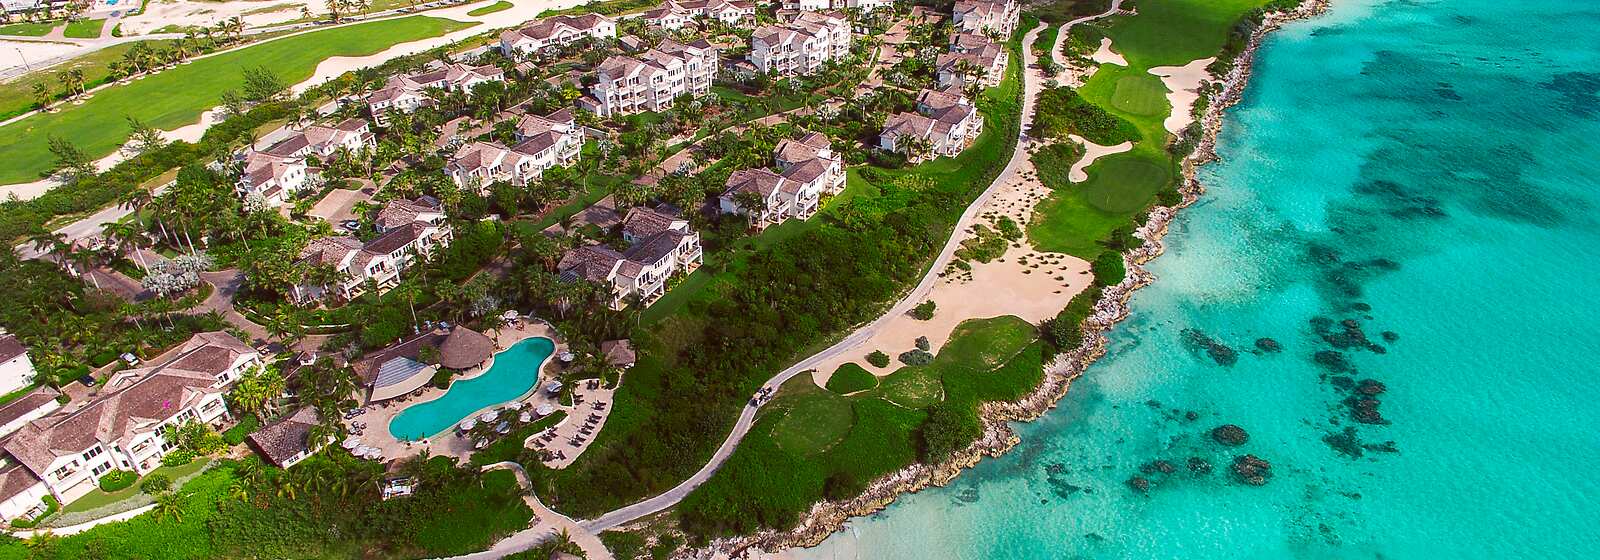 Grand Isle Resort Aerial View